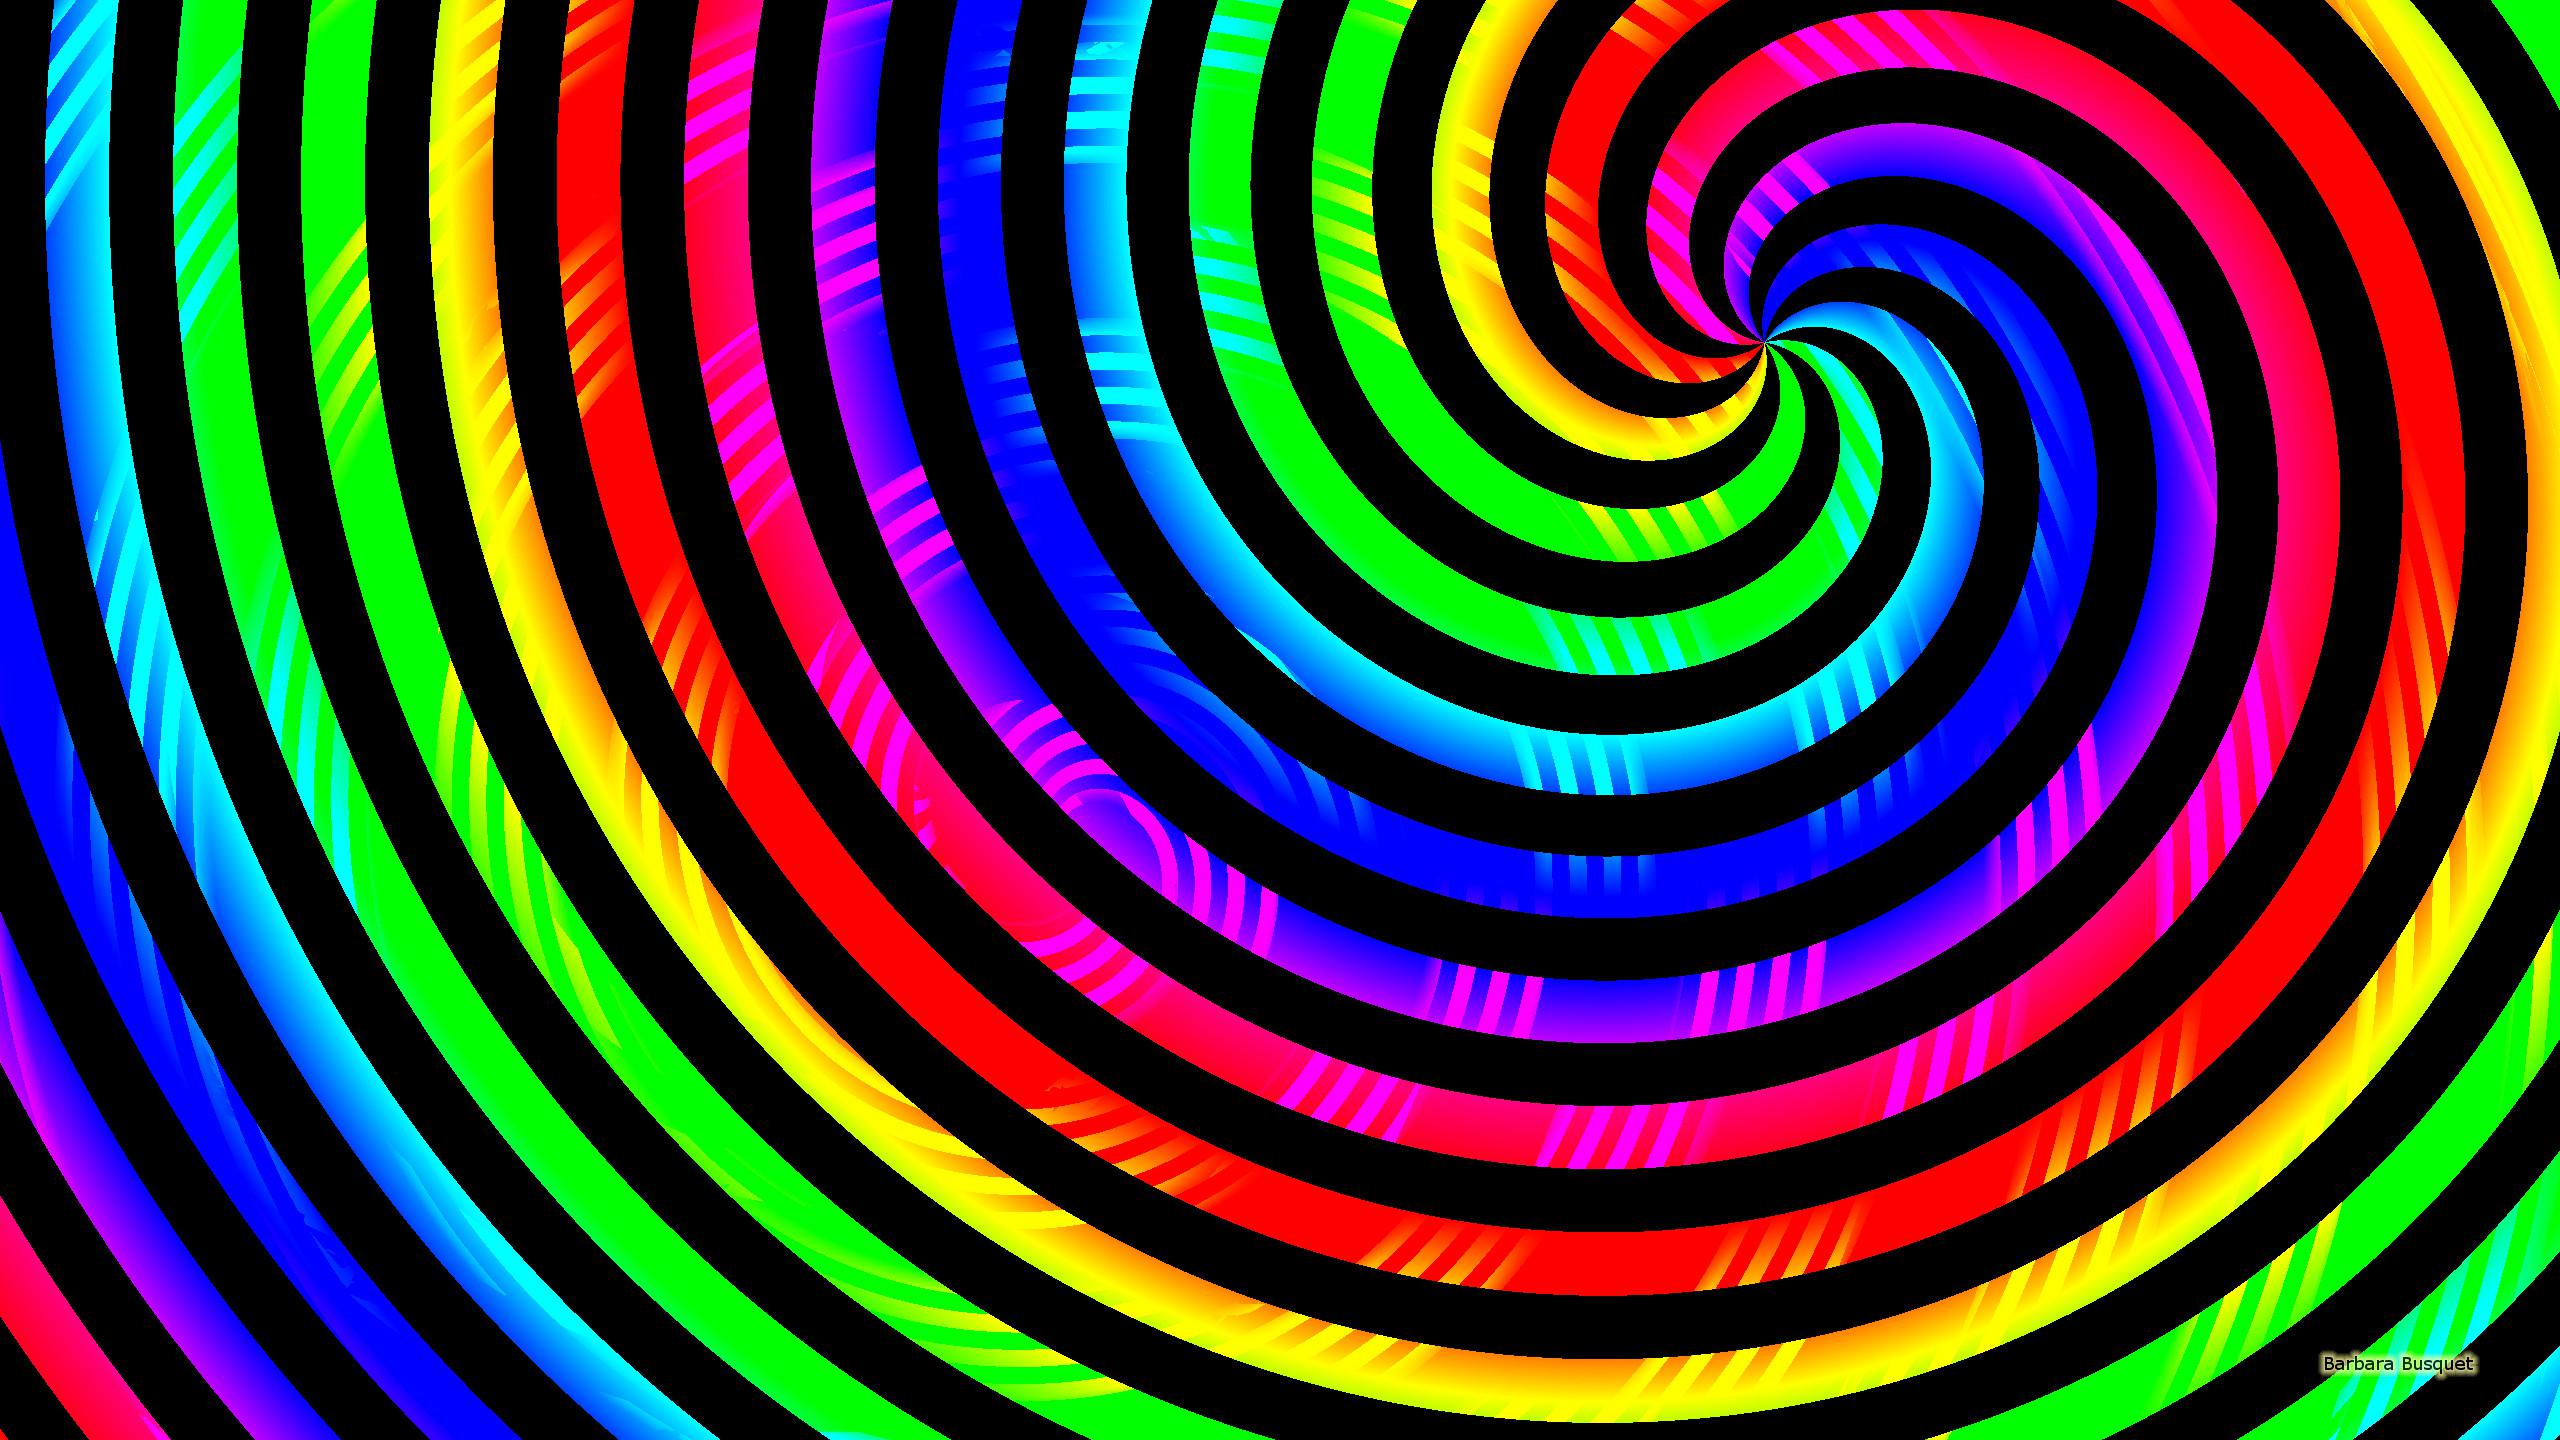 Rainbow spiral Wallpaper